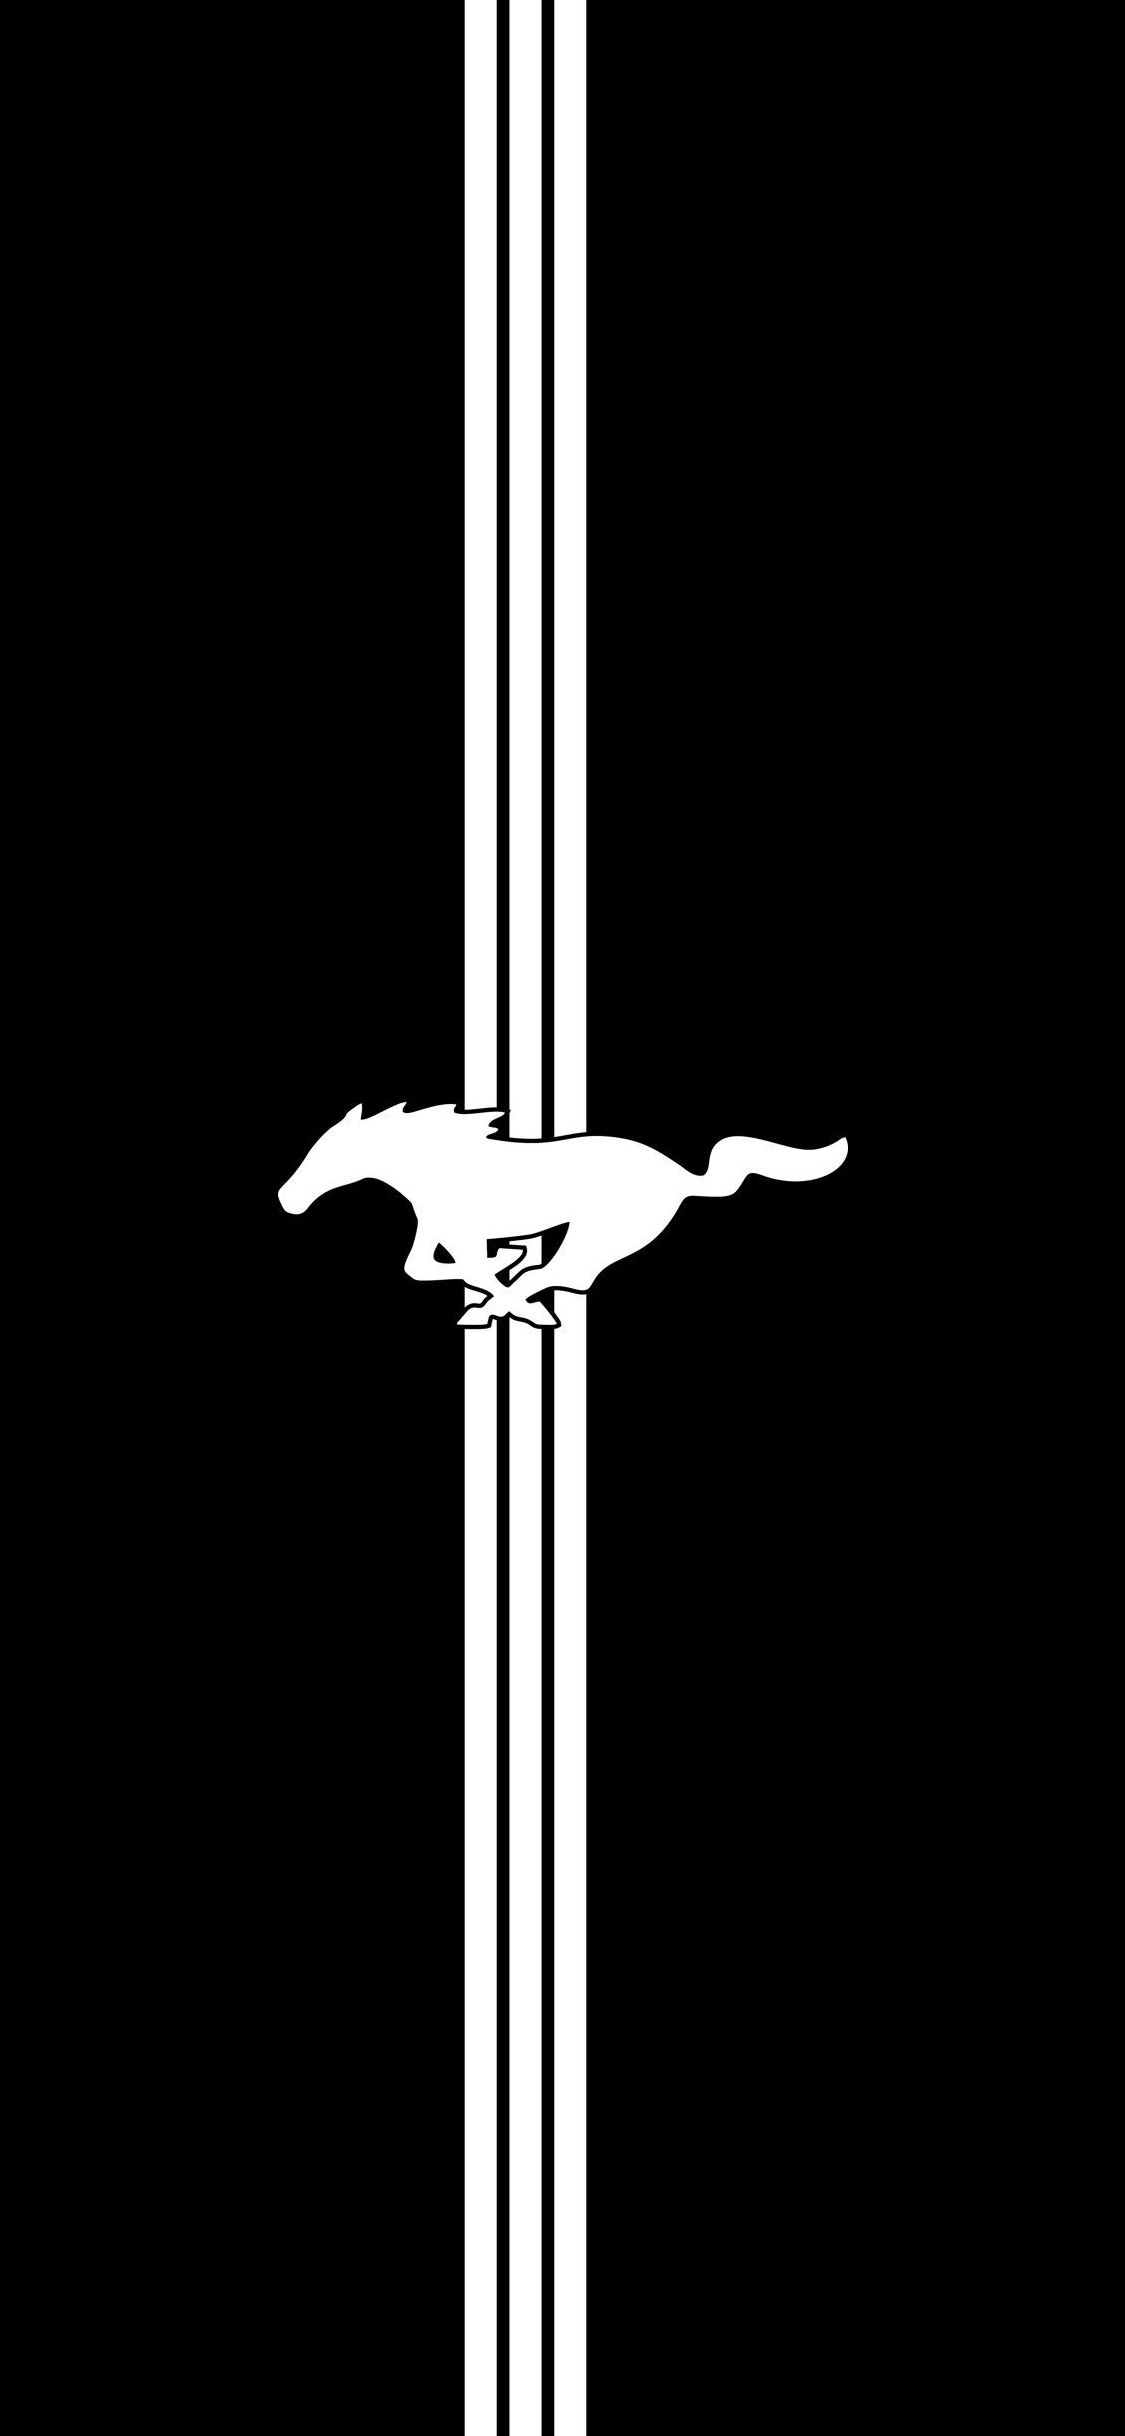 Mustang Logo Wallpapers